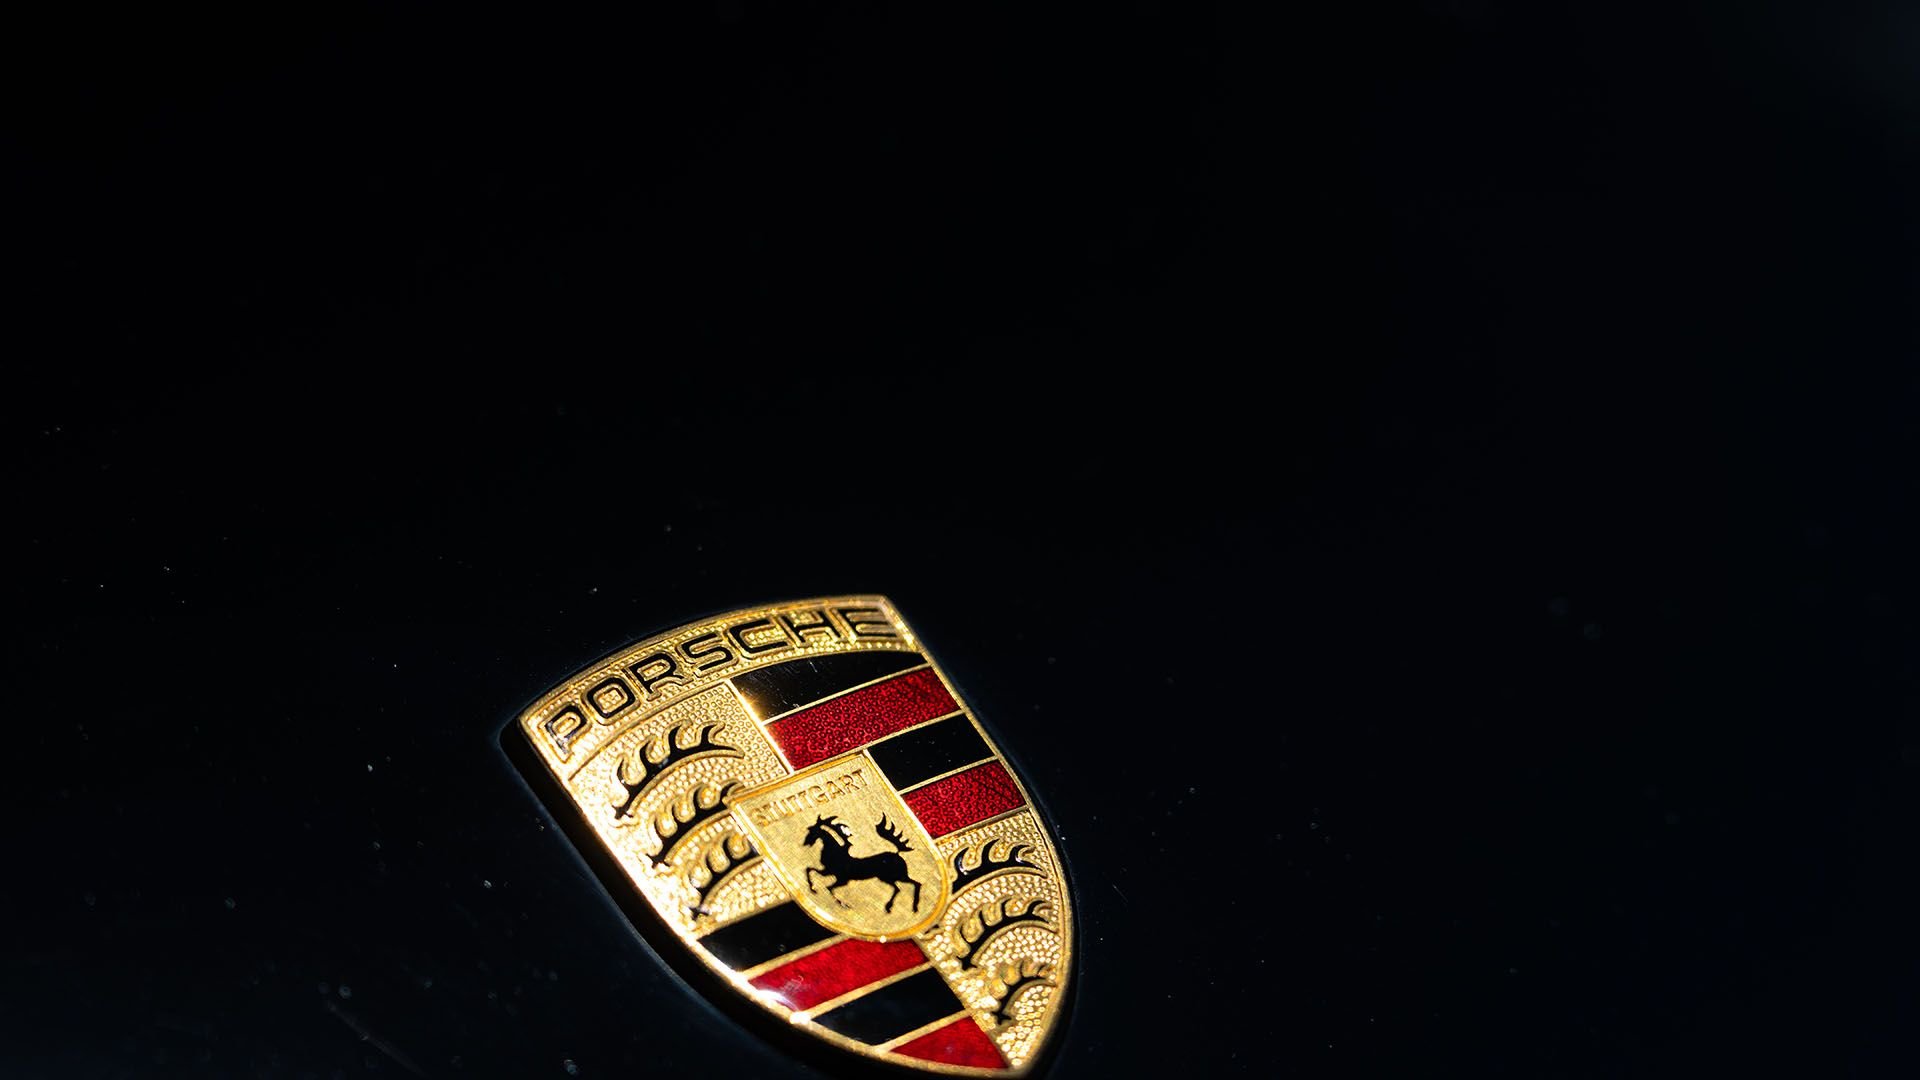 DT: Porsche Turbo Dealership Sign